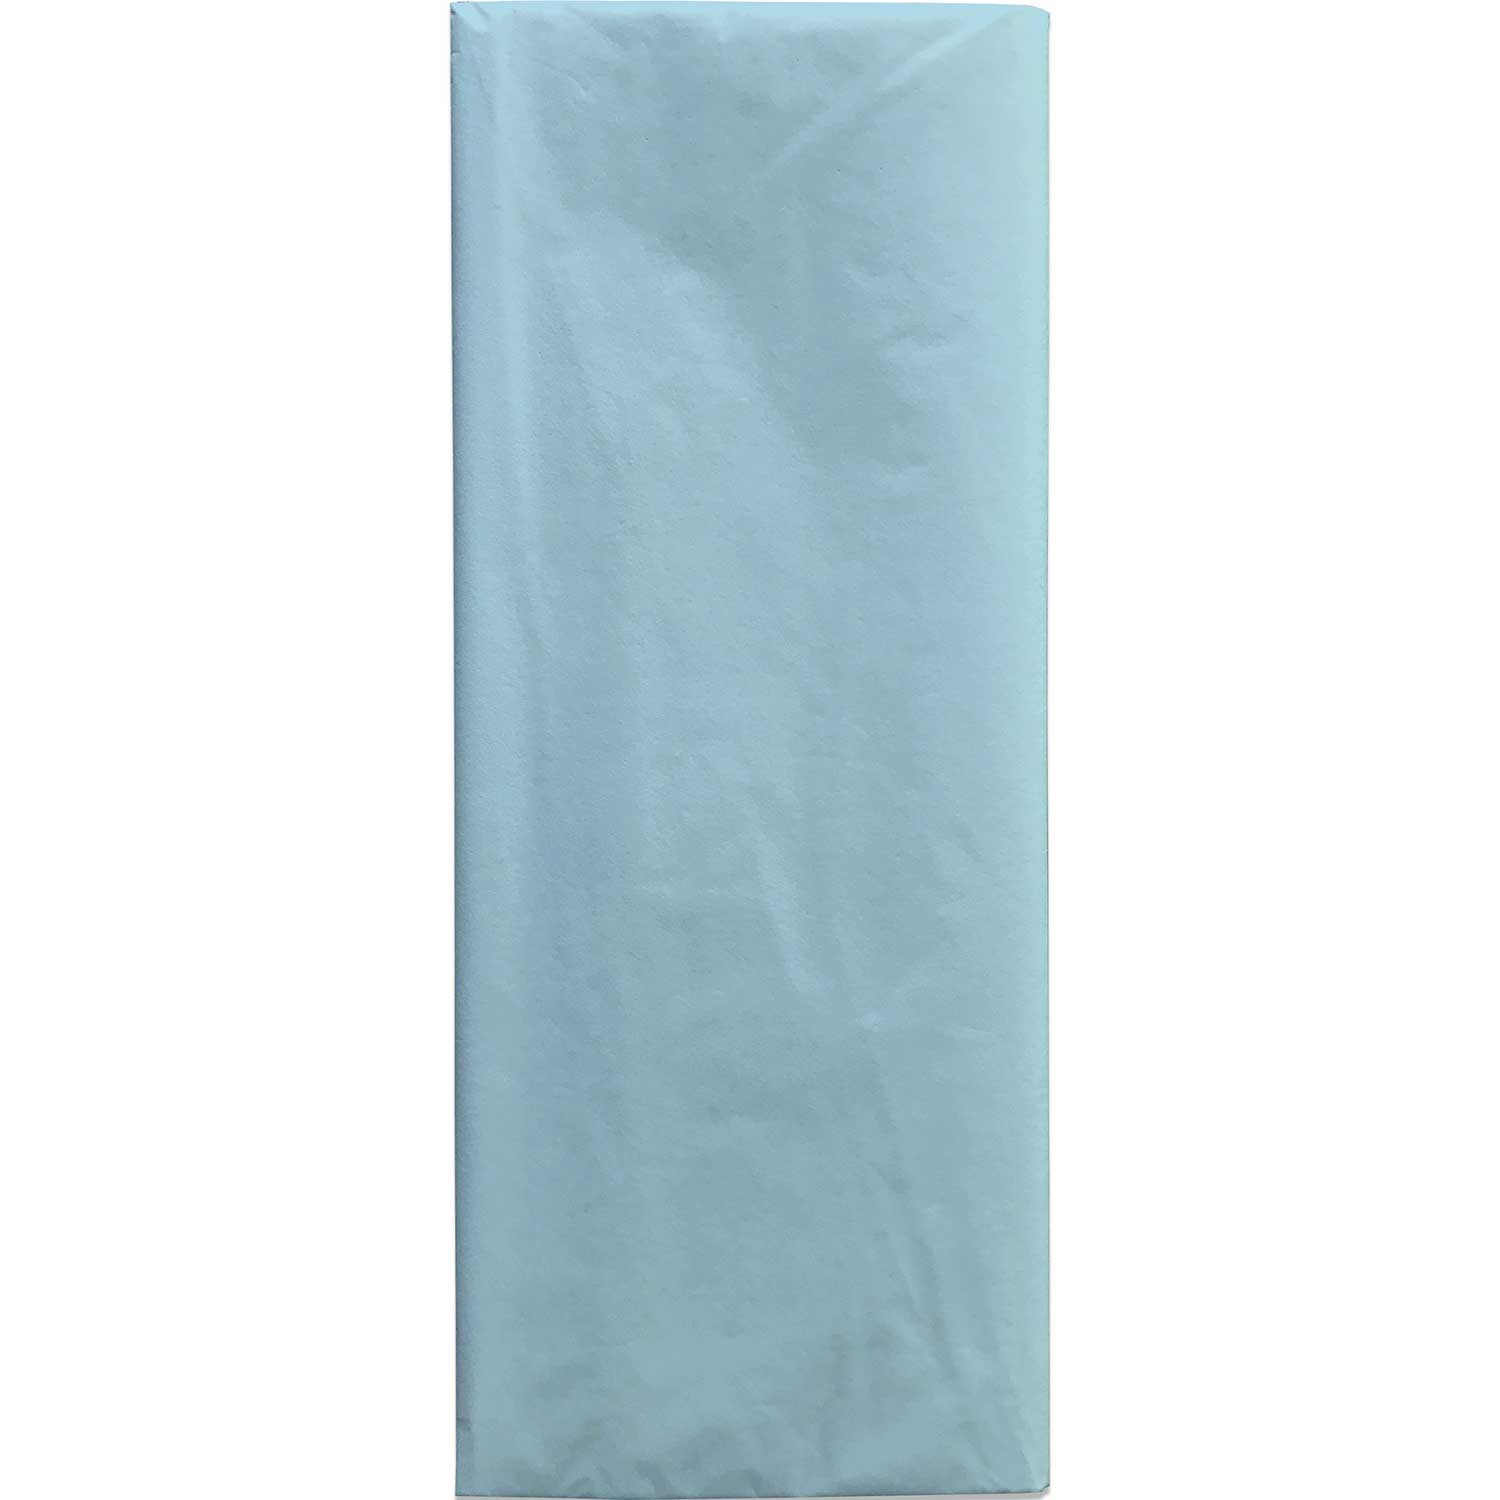 Jillson & Roberts 20 x 26 Gift Tissue, Pastel Blue- 96 Folded Sheets